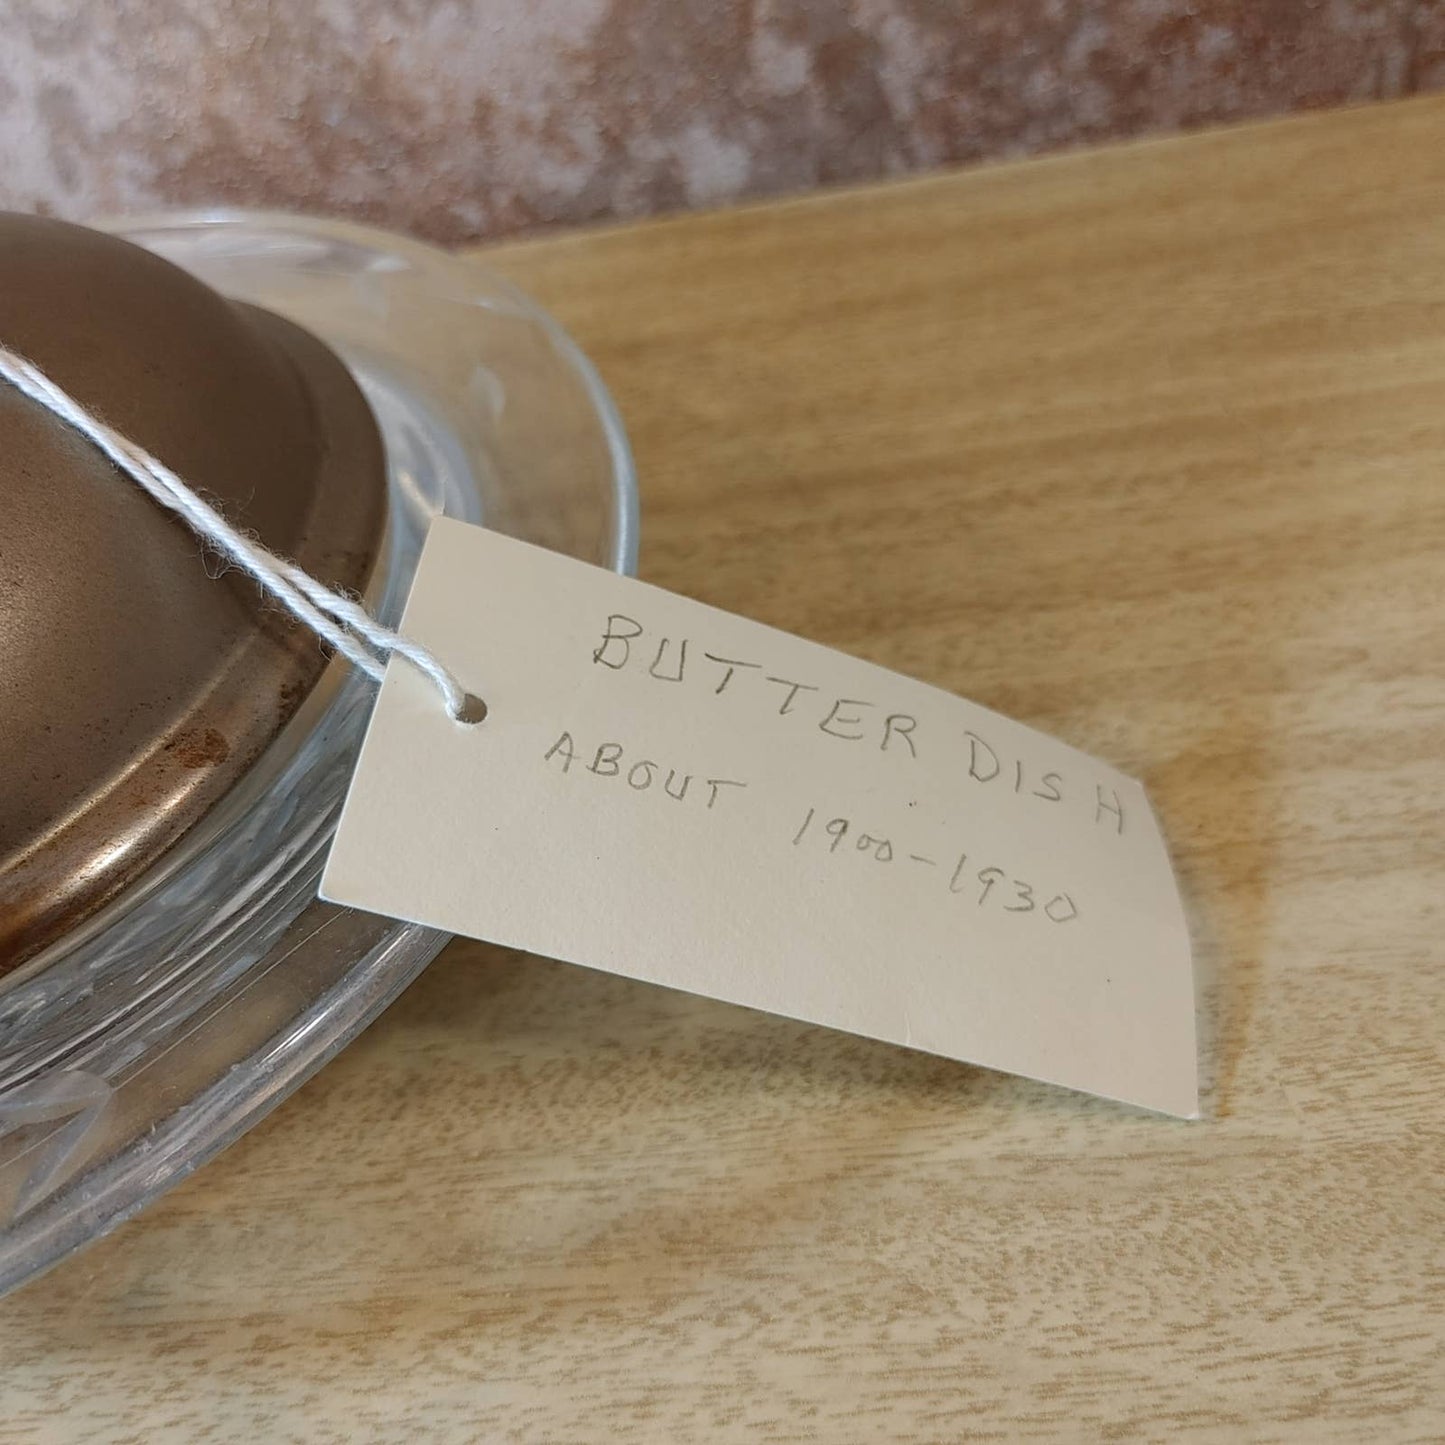 Better Butter! Antique Butter Dish 1930's Glass Tin Serve Ware Formal Dining